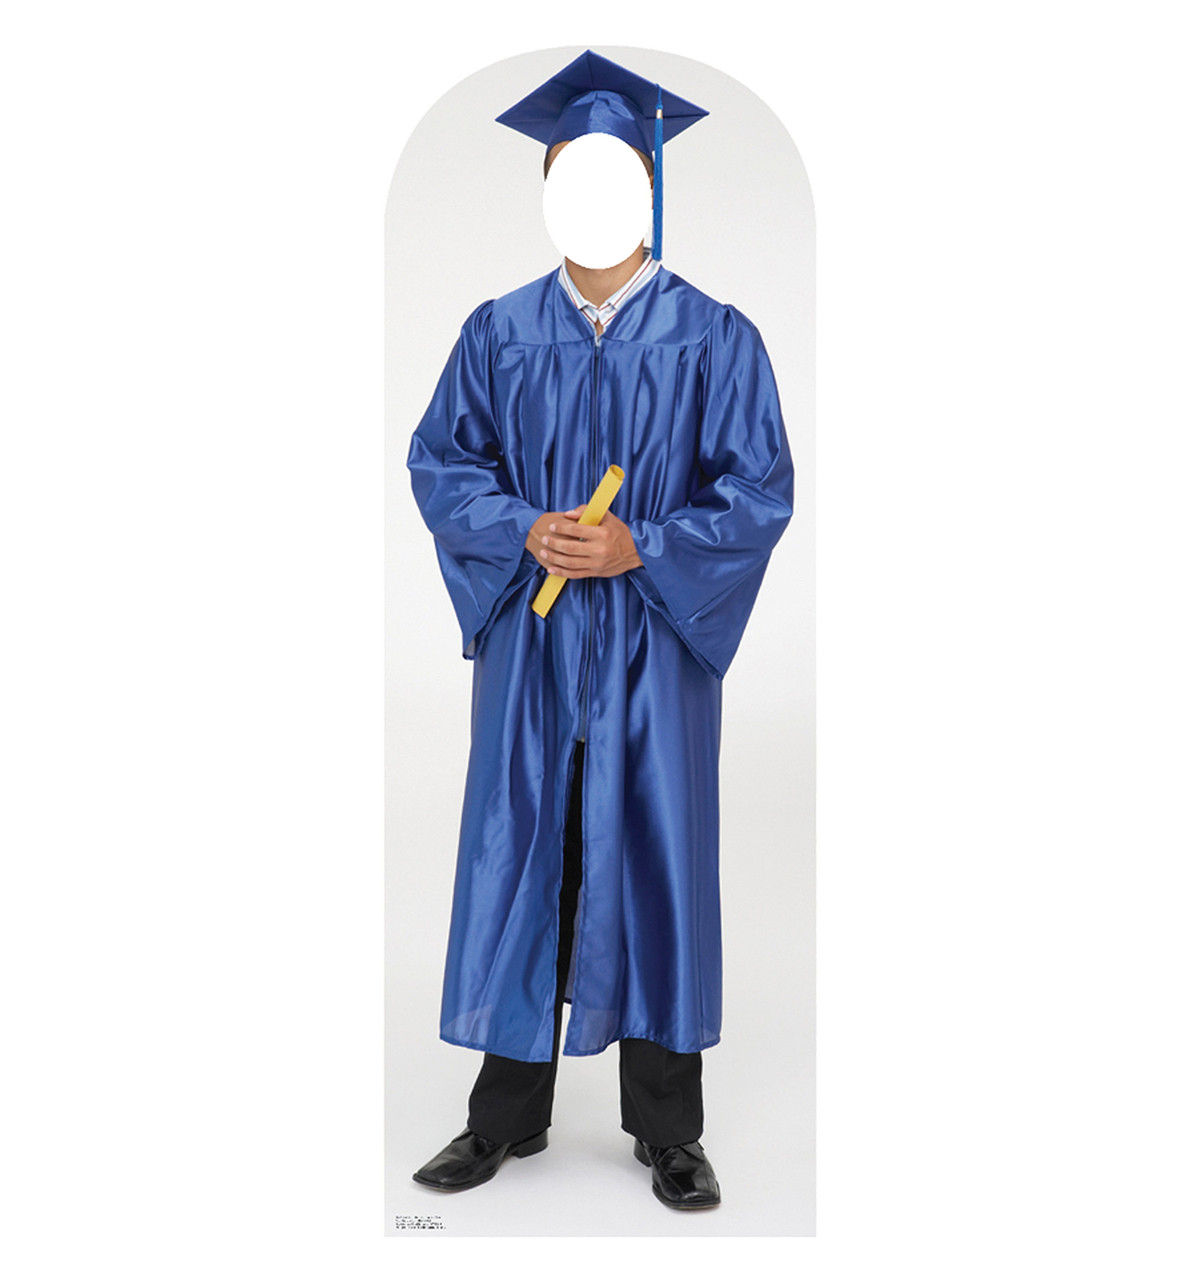 Hot Item] Academic Royal Blue Graduation Gown Cap Honor Cords | Blue  graduation, Blue graduation gown and cap, Royal blue graduation gown